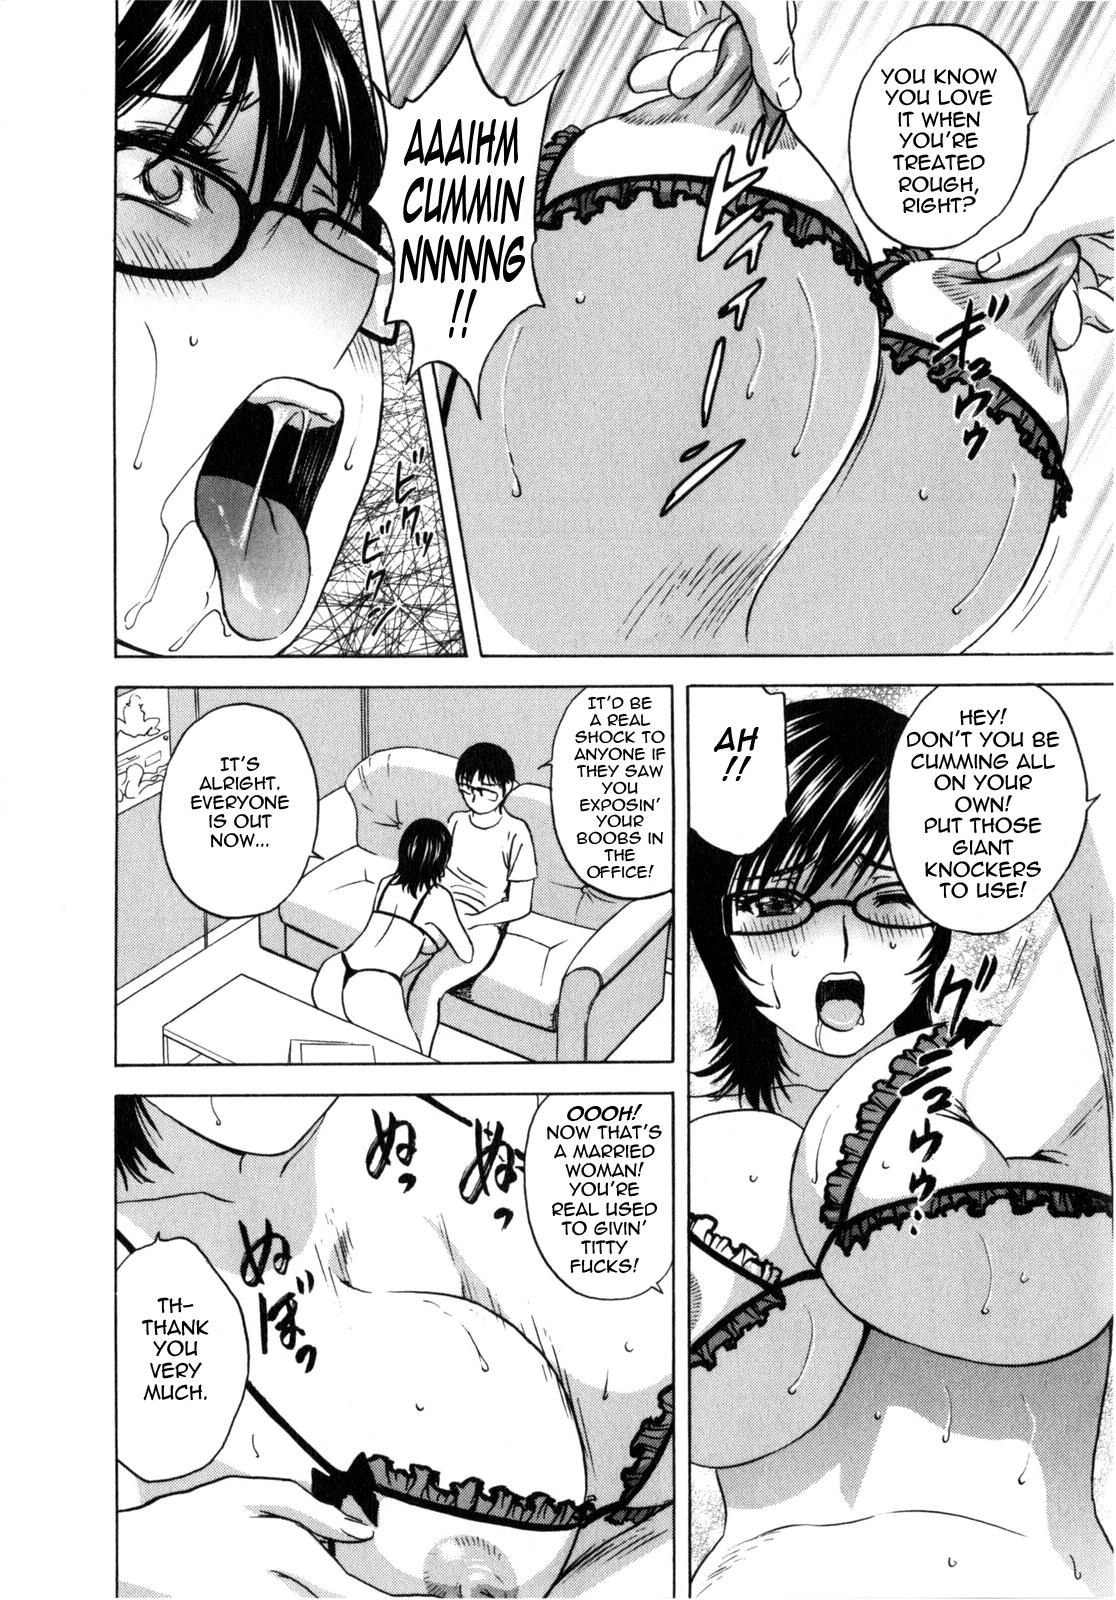 [Hidemaru] Life with Married Women Just Like a Manga 1 - Ch. 1-9 [English] {Tadanohito} 172